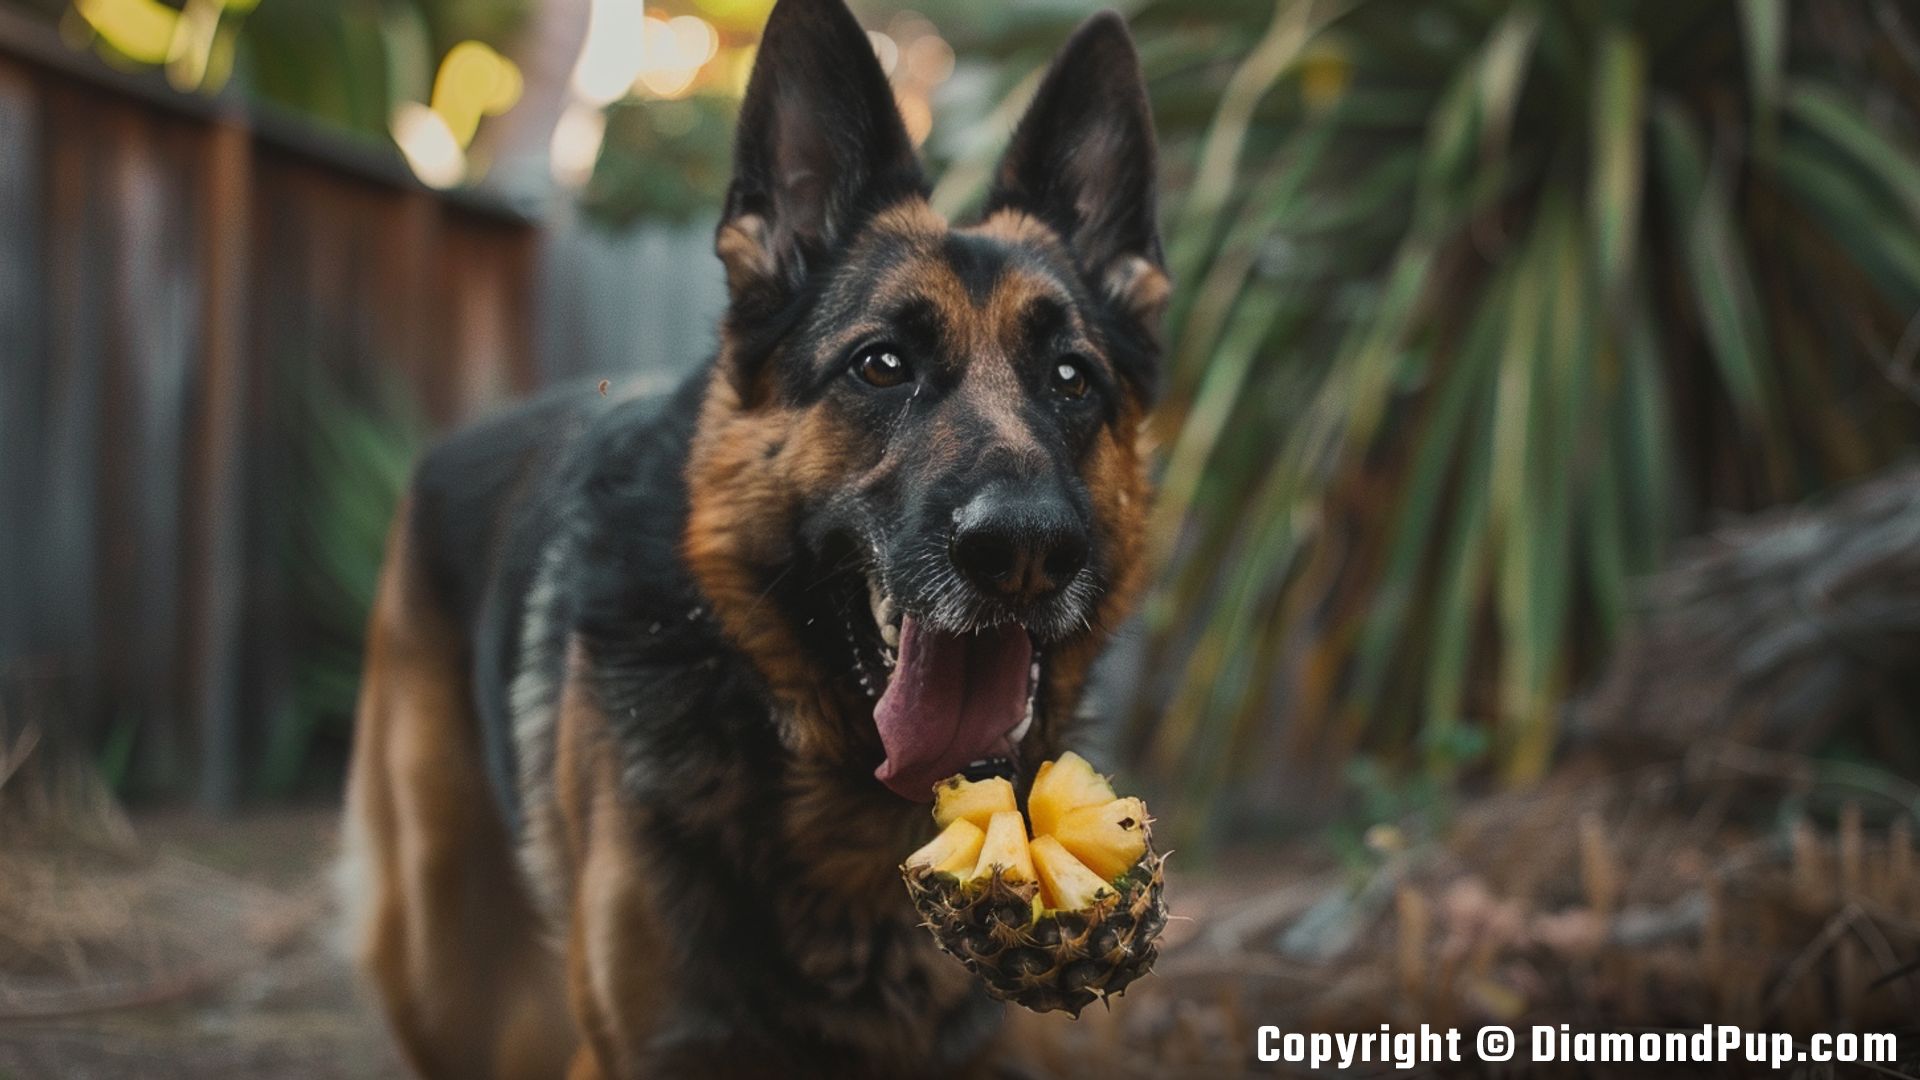 Image of a Playful German Shepherd Eating Pineapple